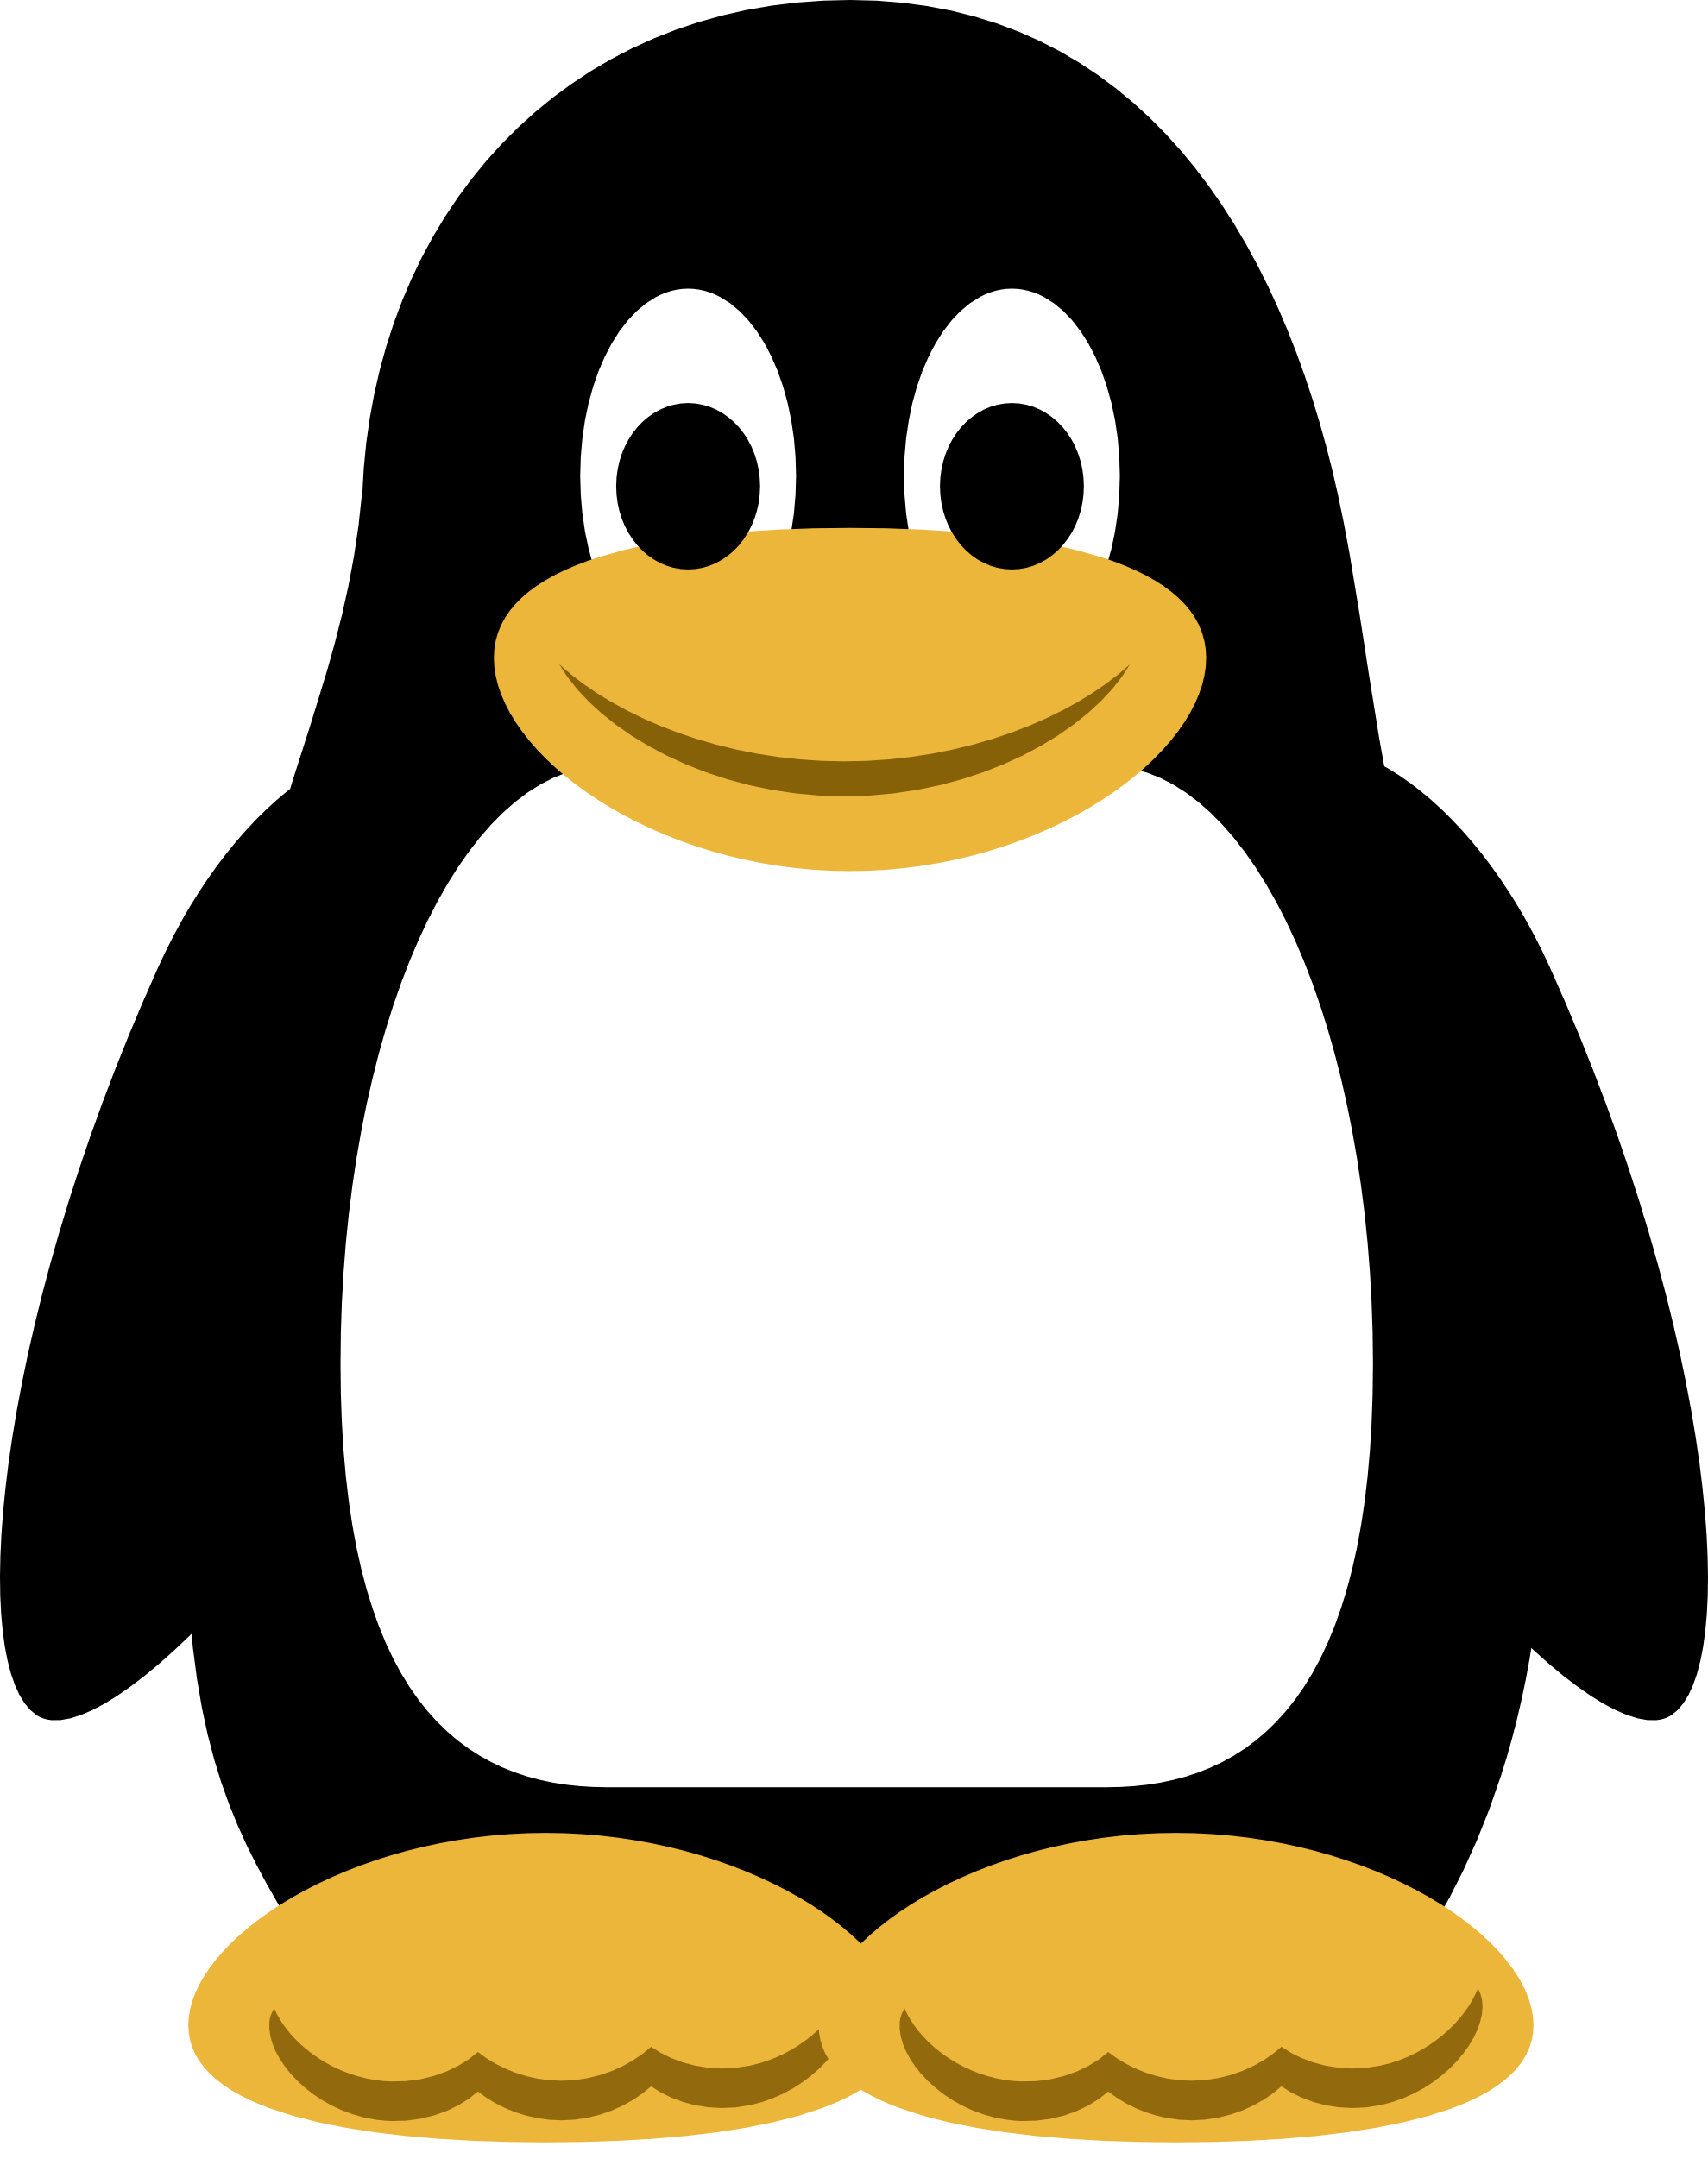 Pinguin clip art